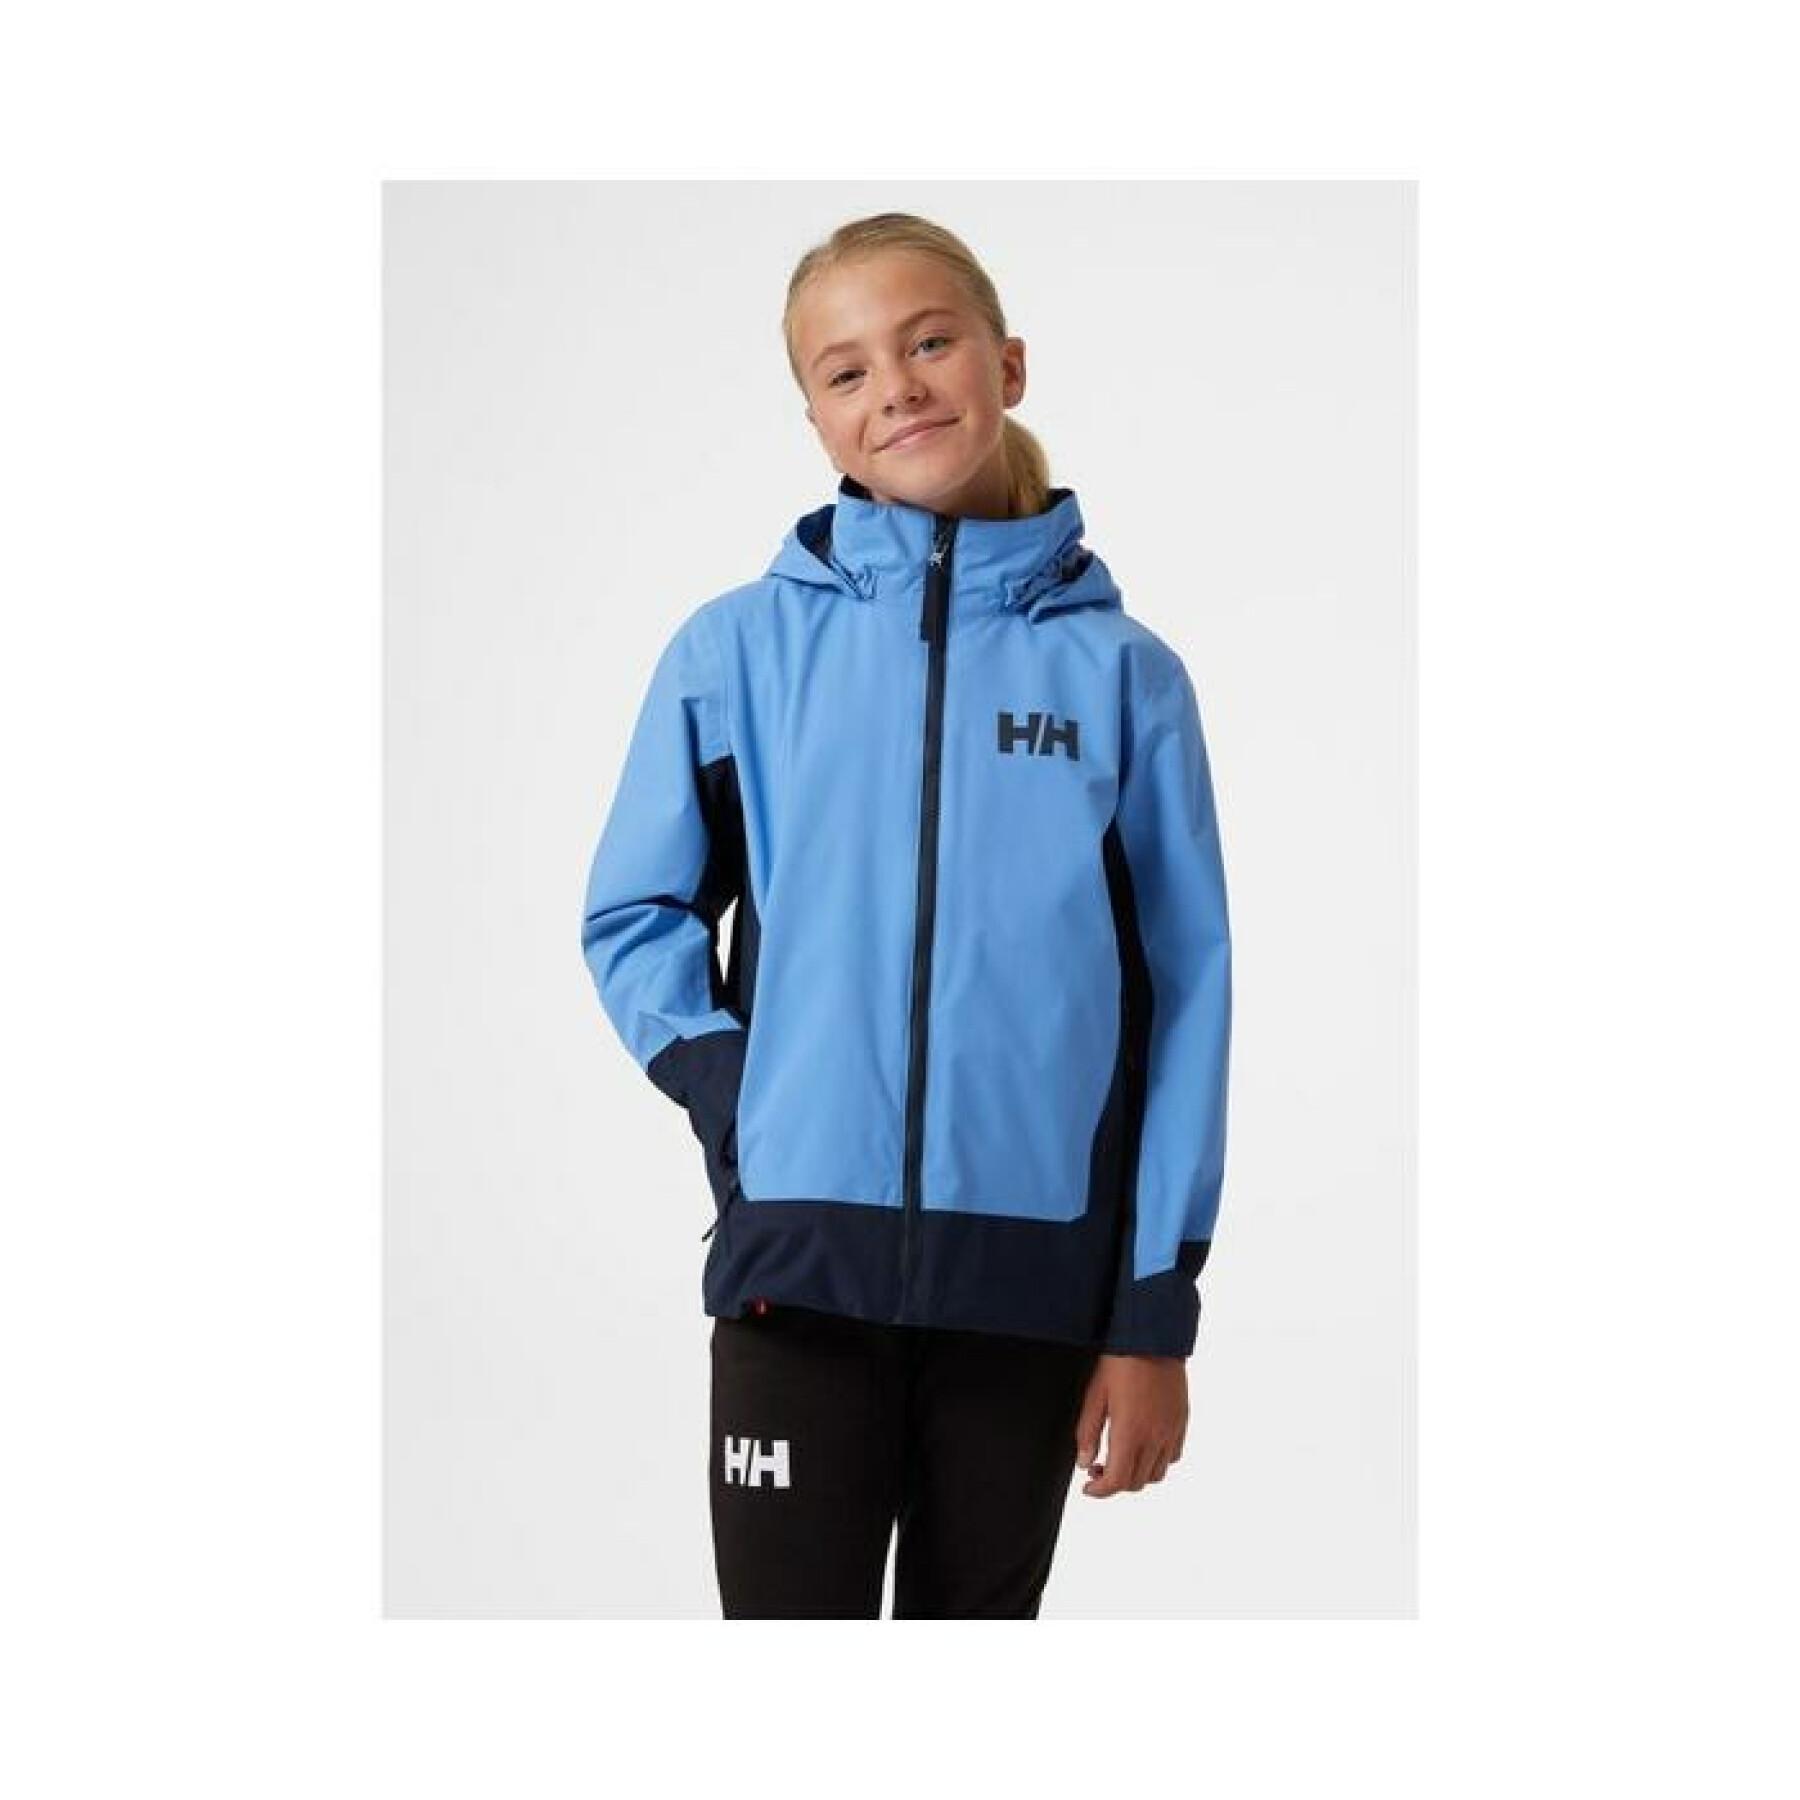 Waterproof jacket with child border Helly Hansen